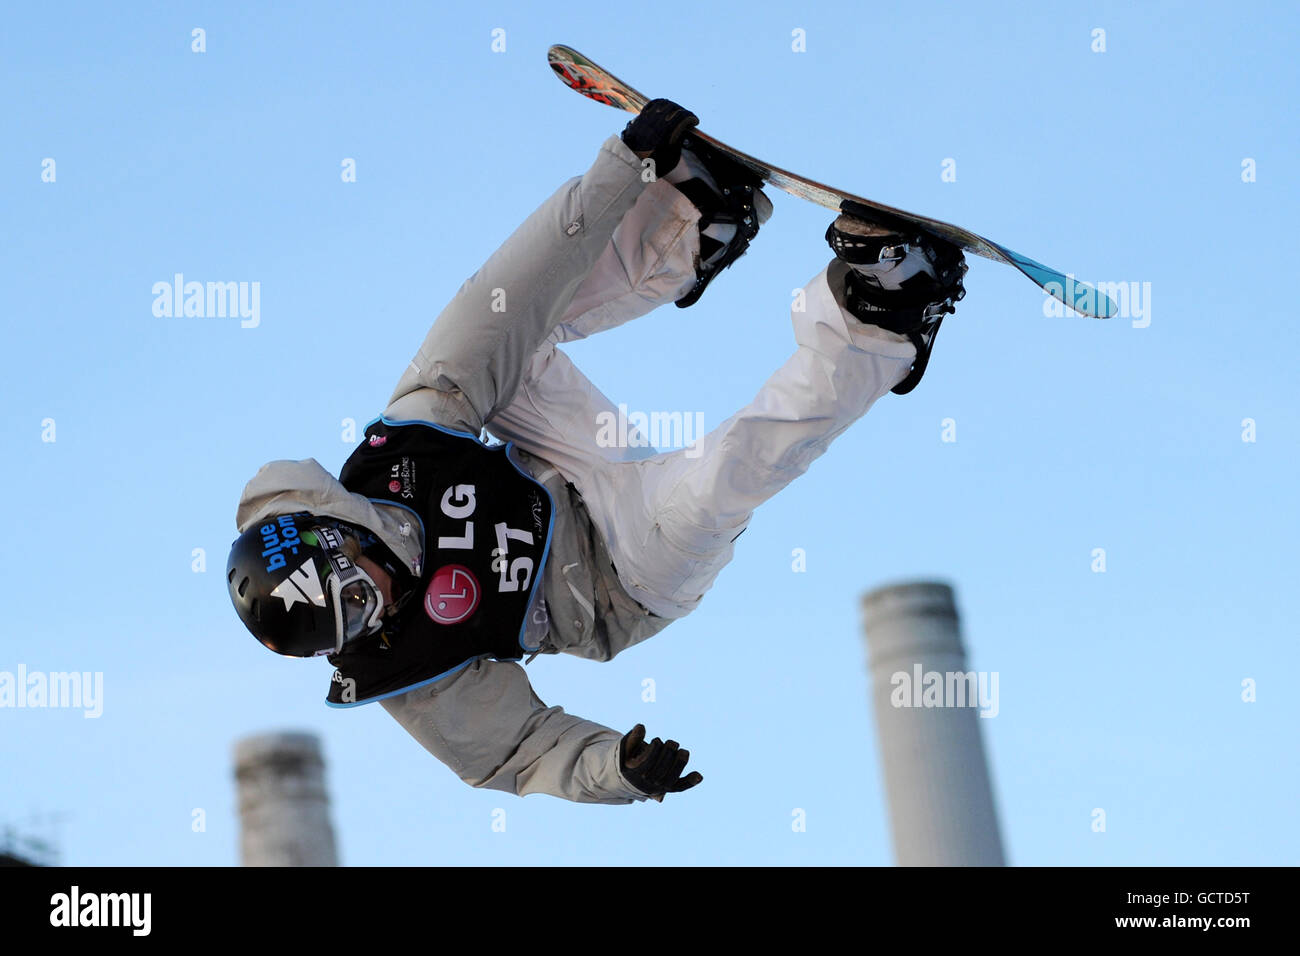 Clemens Schattschneider of Austria during the LG Snowboard FIS World Cup in London Stock Photo